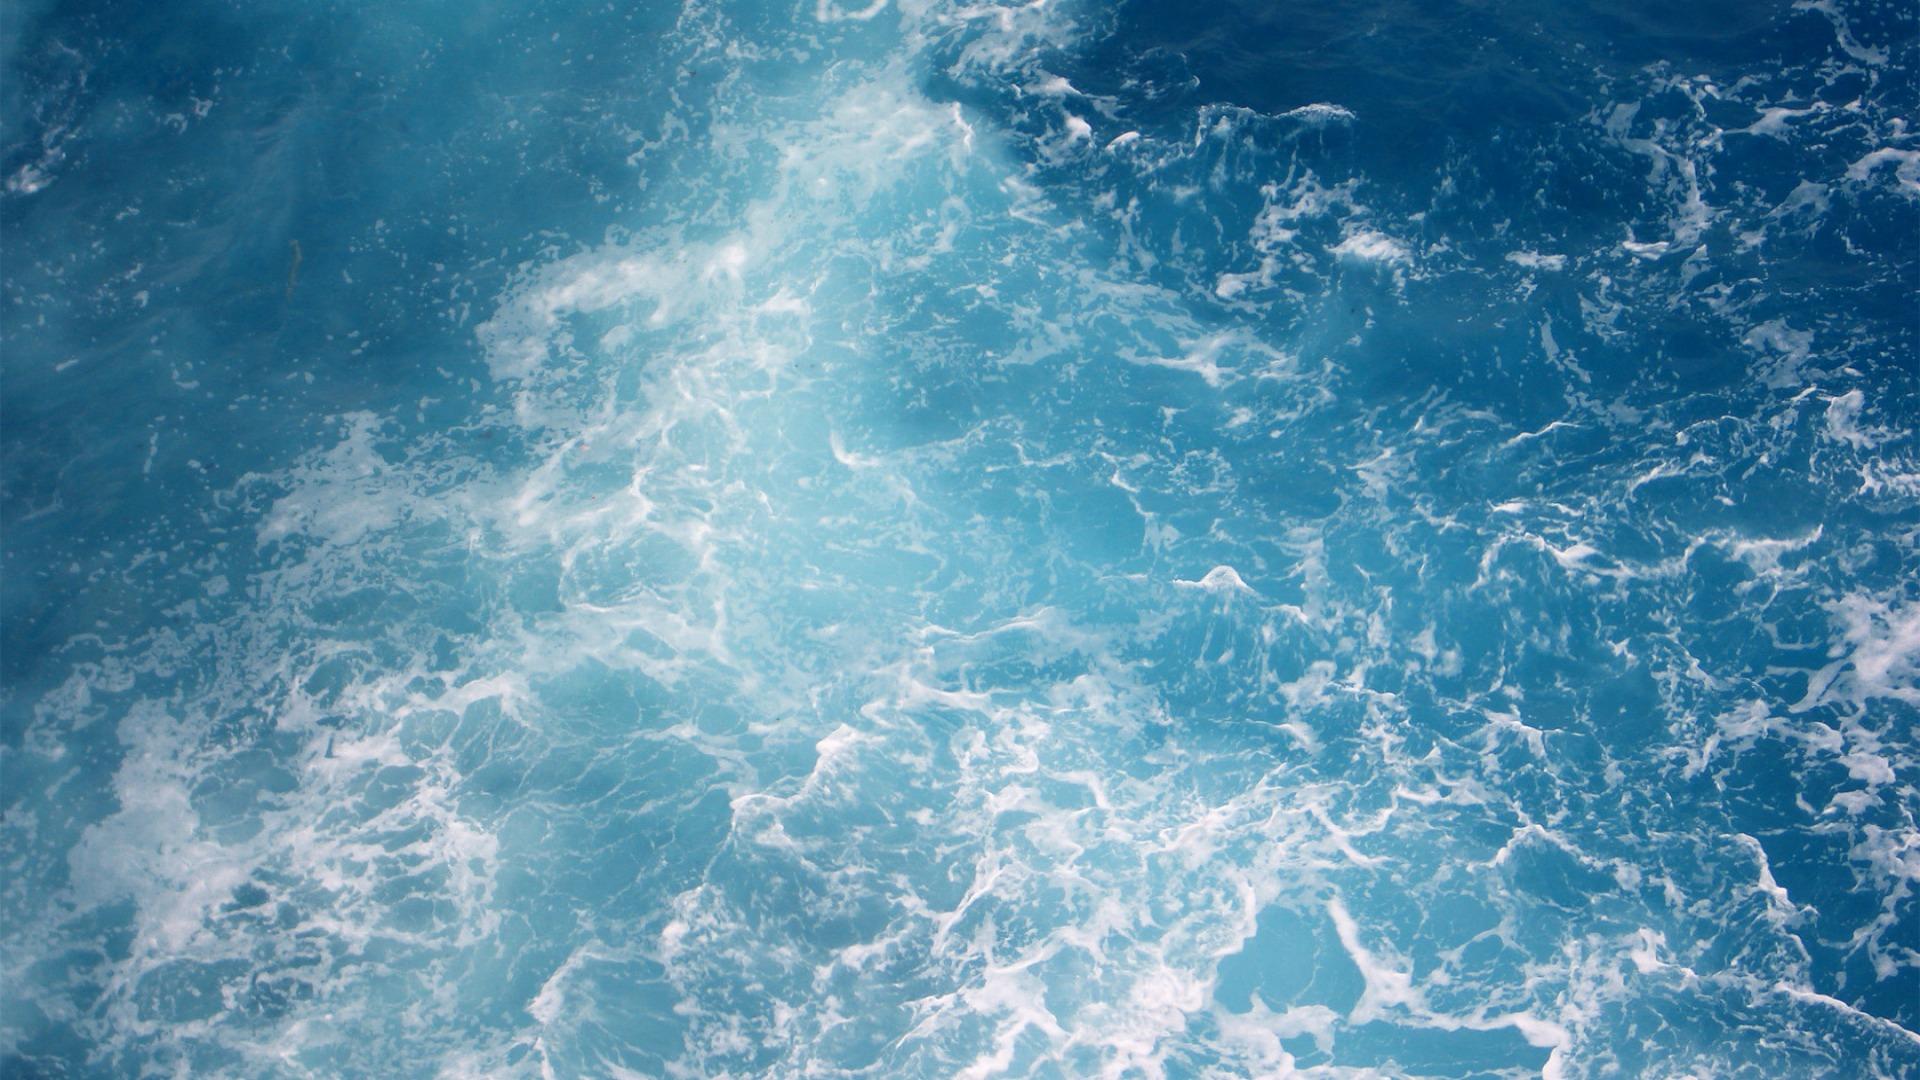 Sea Fresh Water Wallpaper 28520